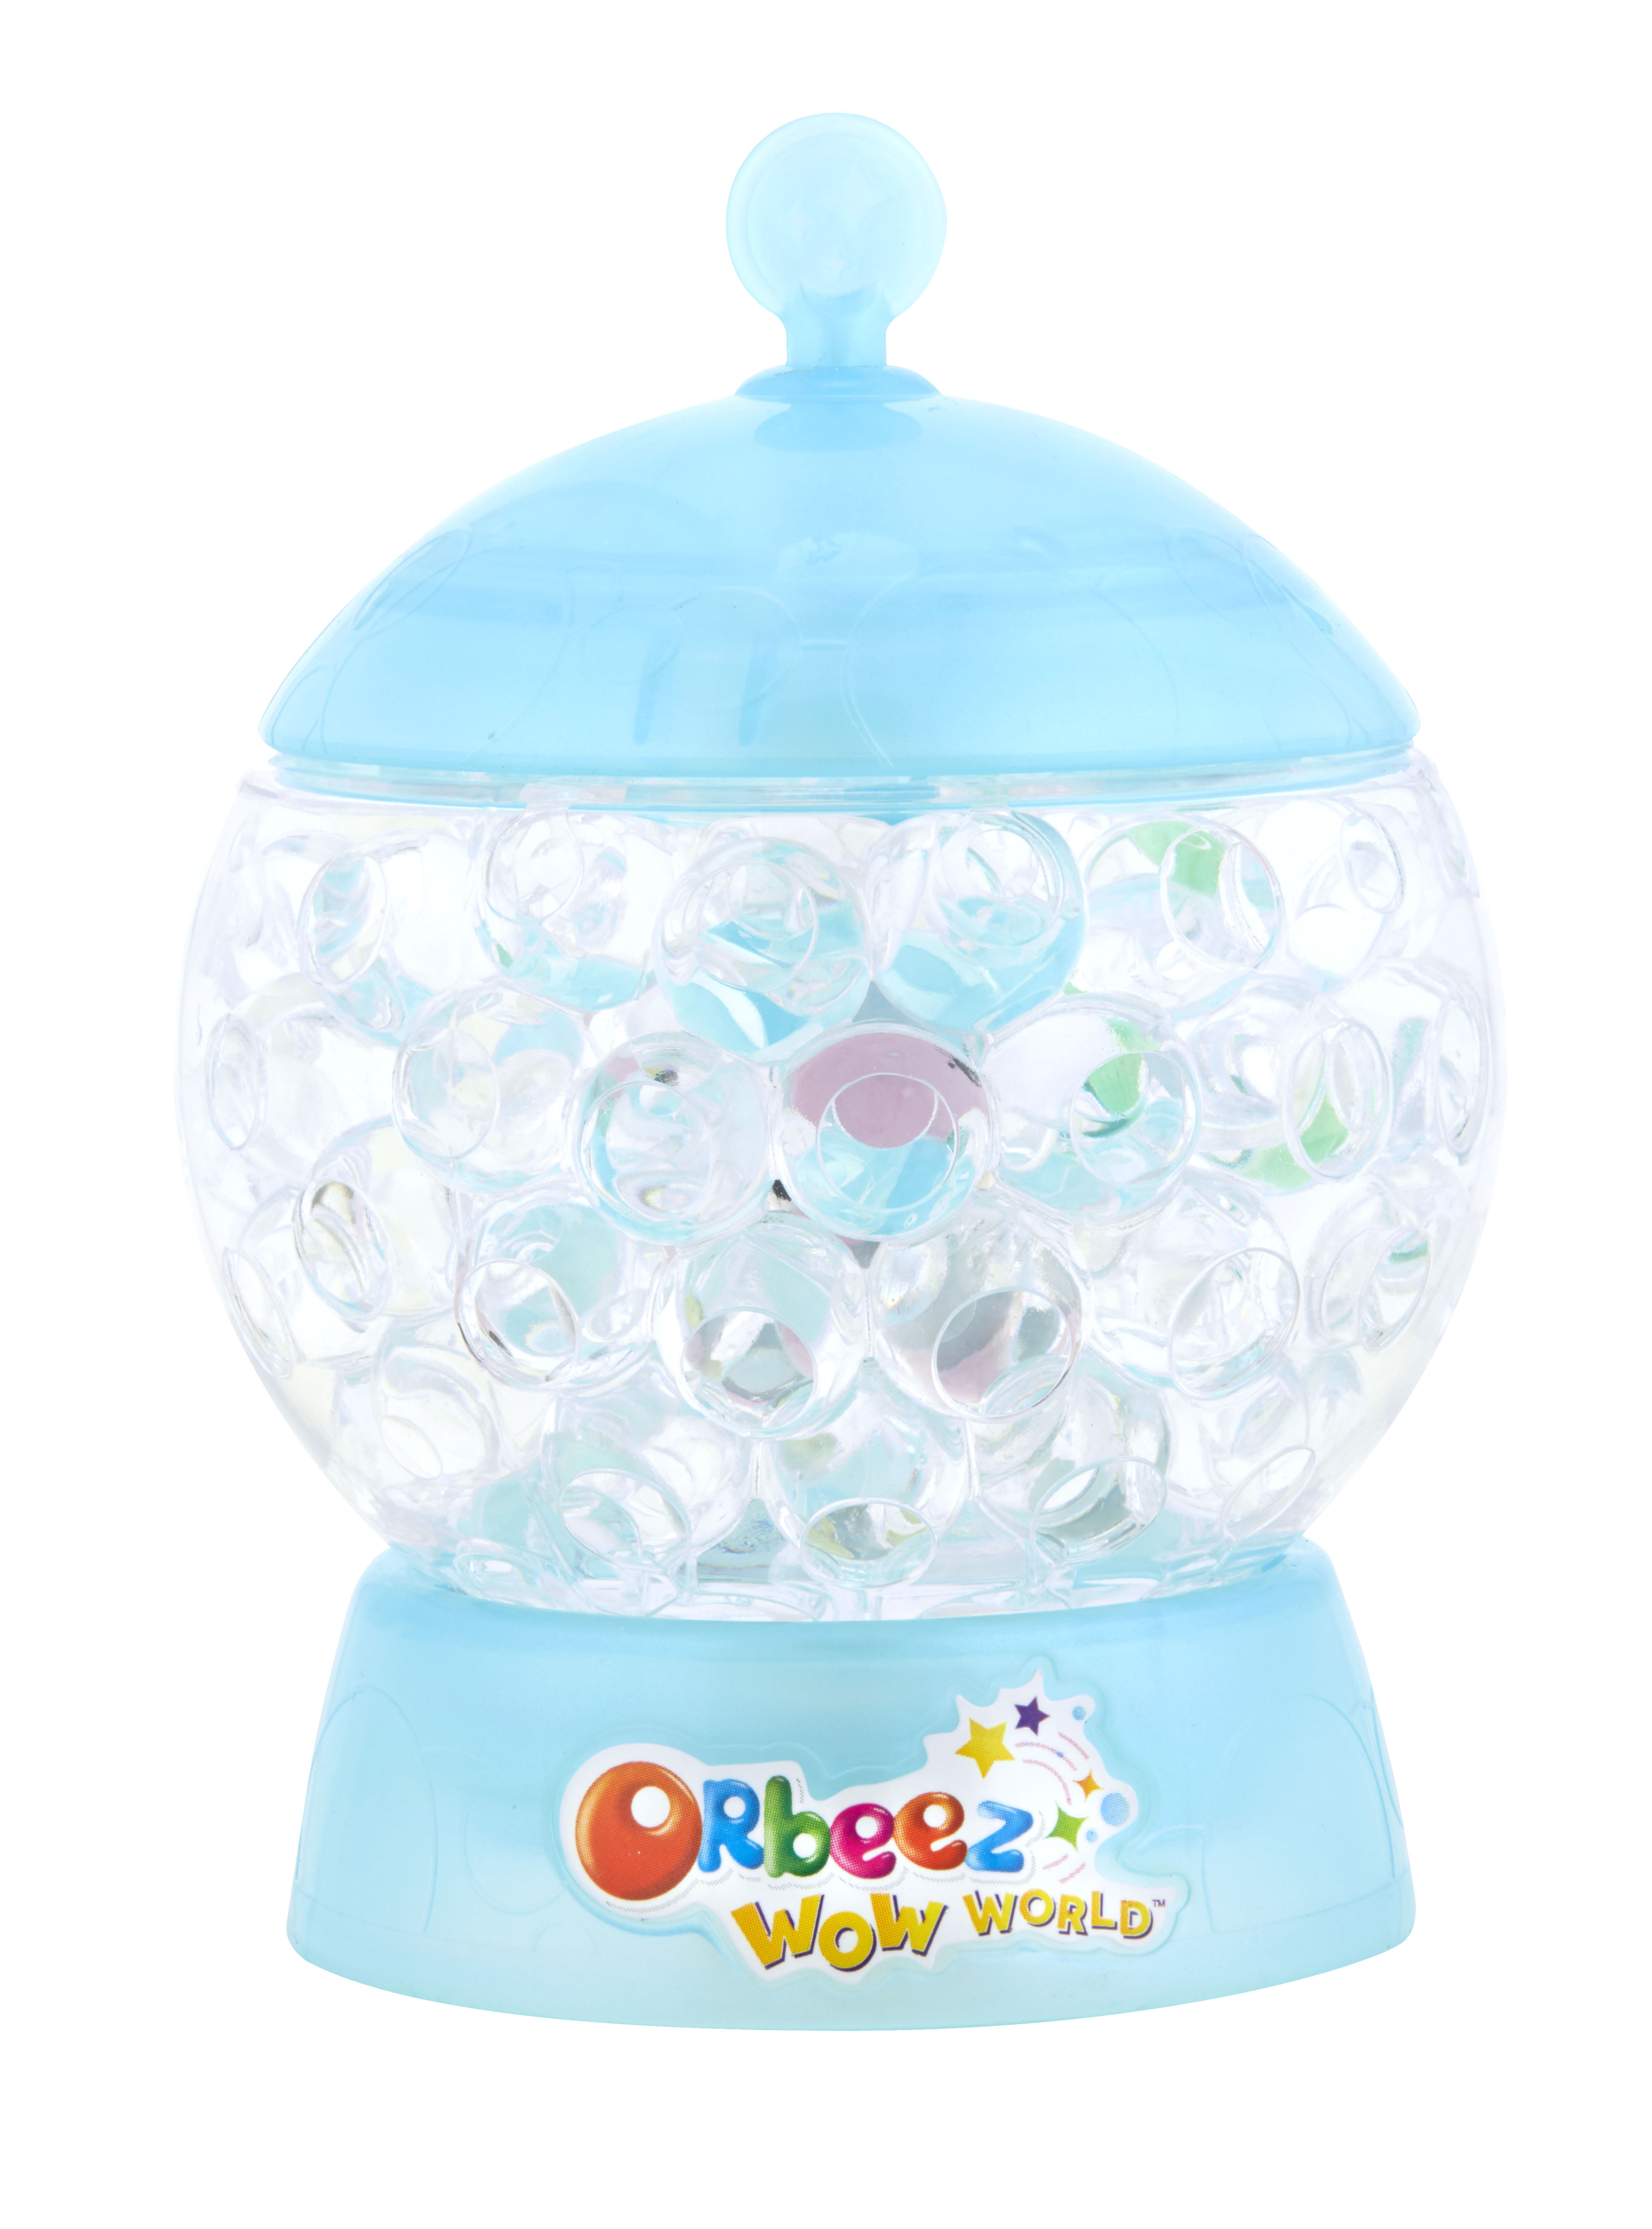 Orbeez Wow World Wowzer Surprise POLAR MAGIC Color Change Water Globe Series 3 